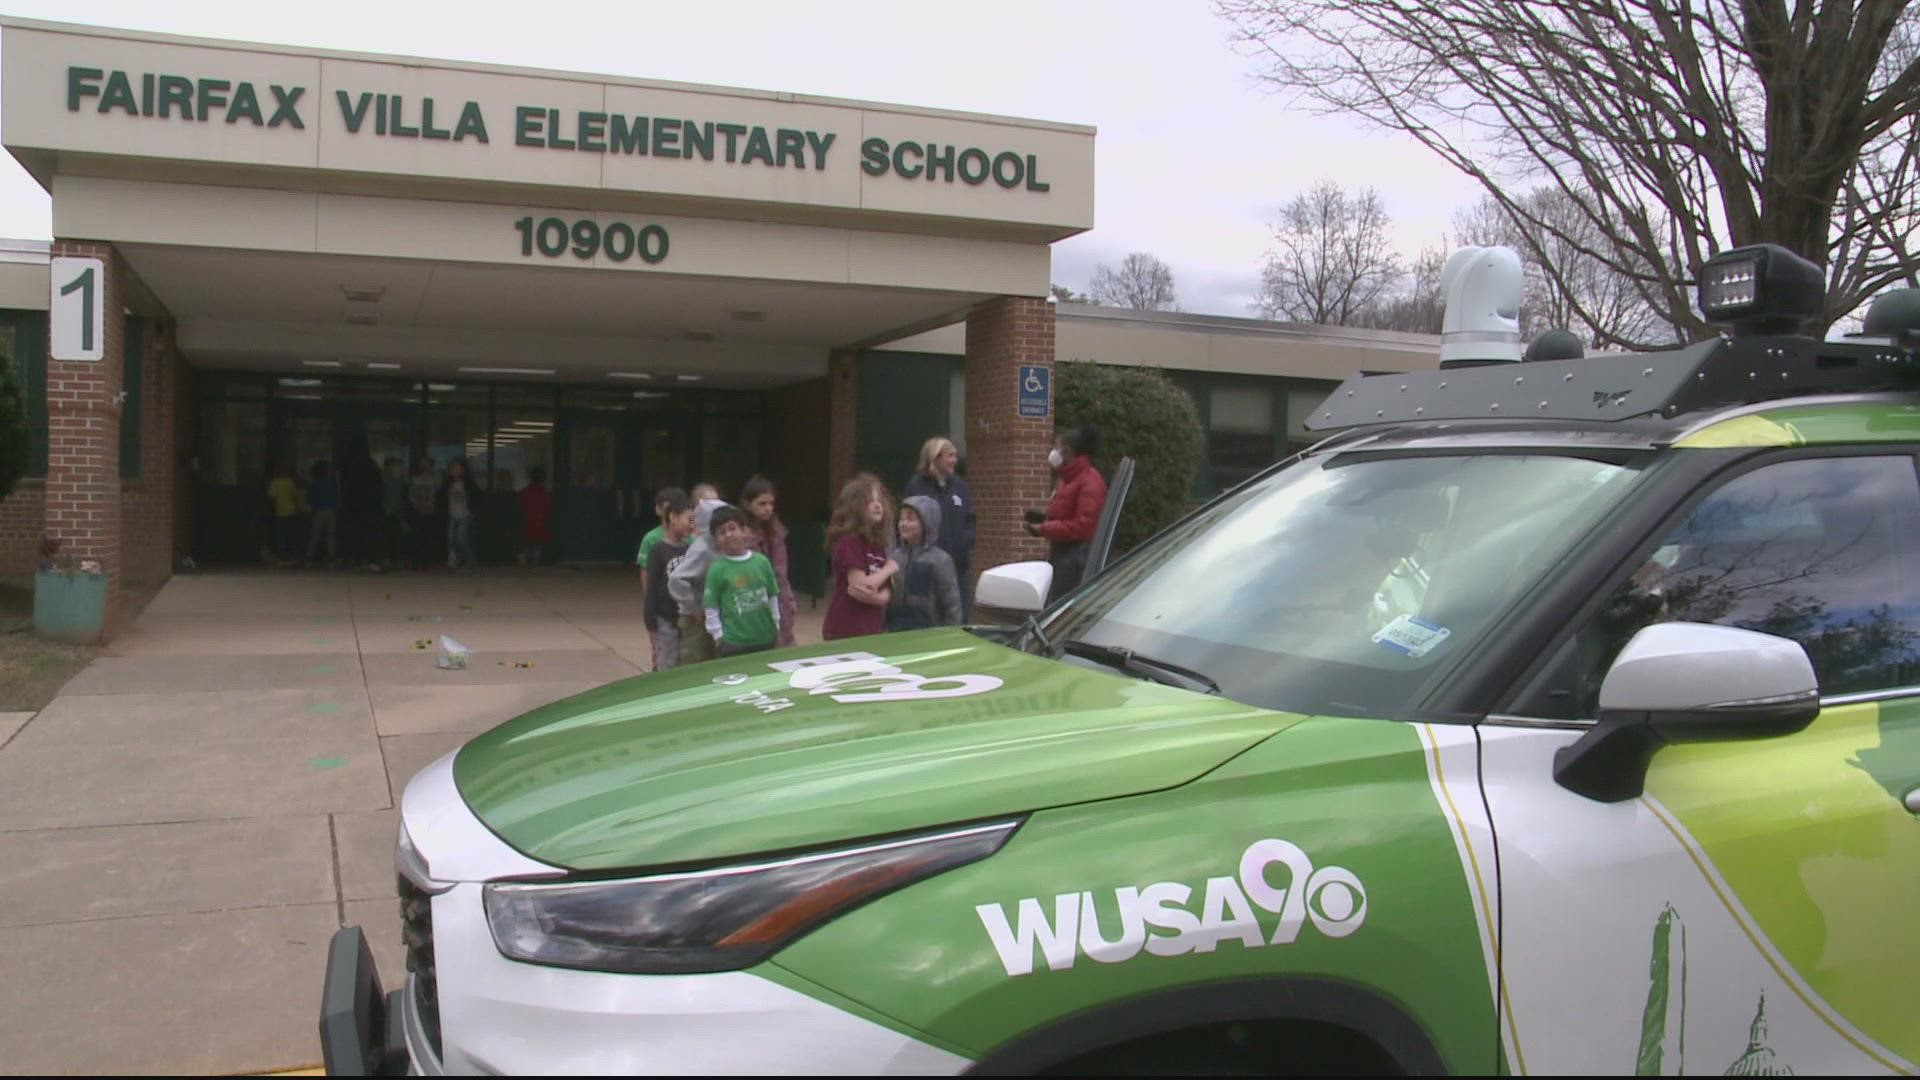 Meteorologist Kaitlyn McGrath visited Fairfax Villa Elementary School for today's WUSA9 Weather Classroom visit.